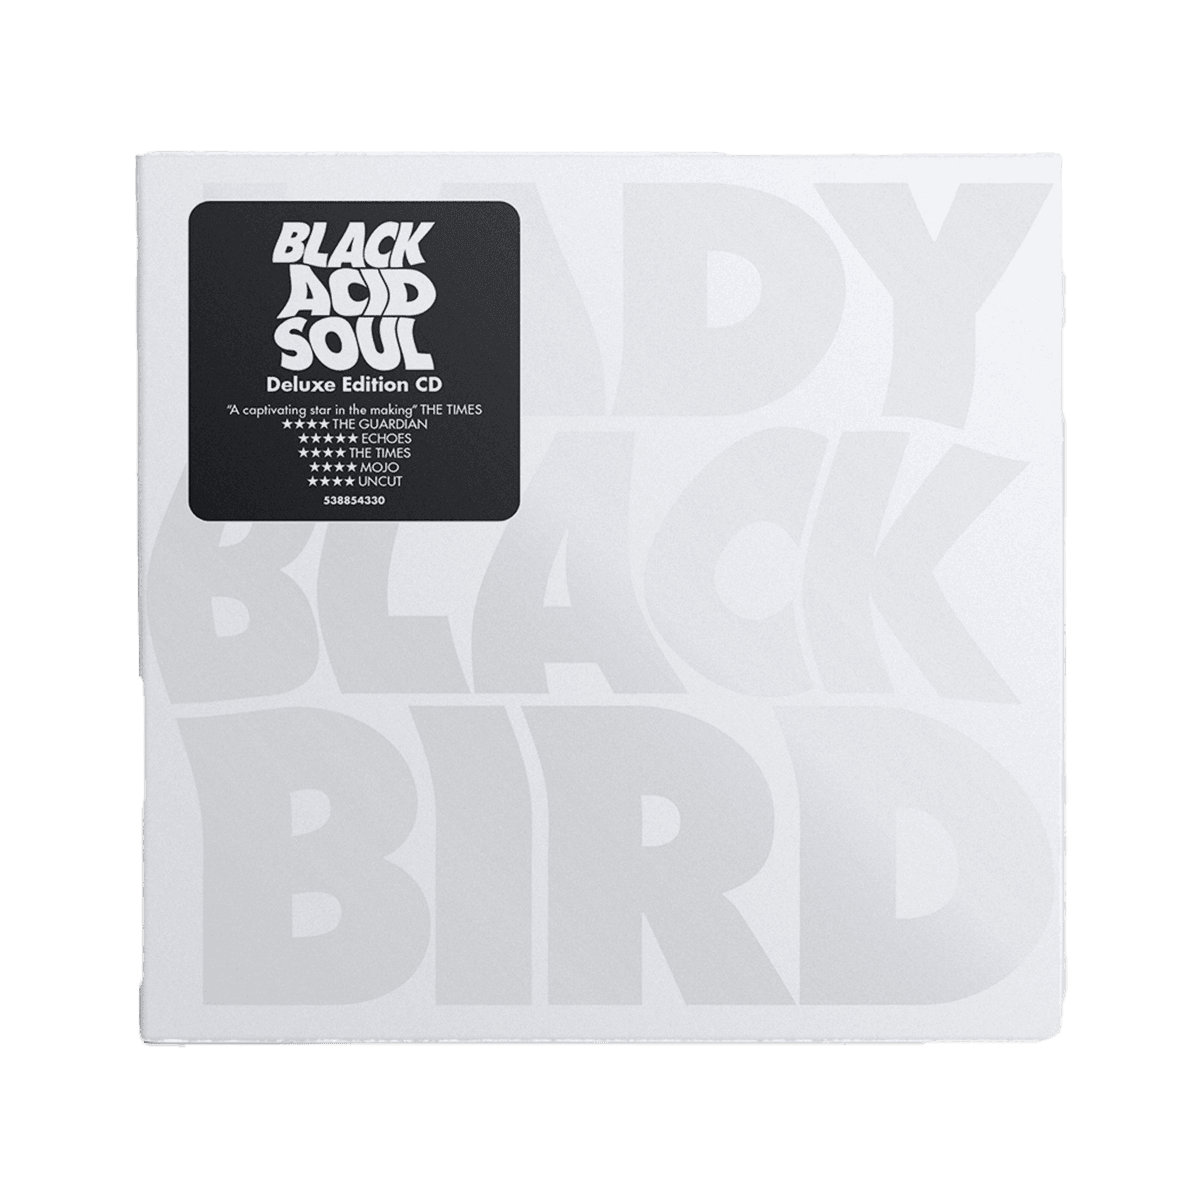 Black Acid Soul - Deluxe CD